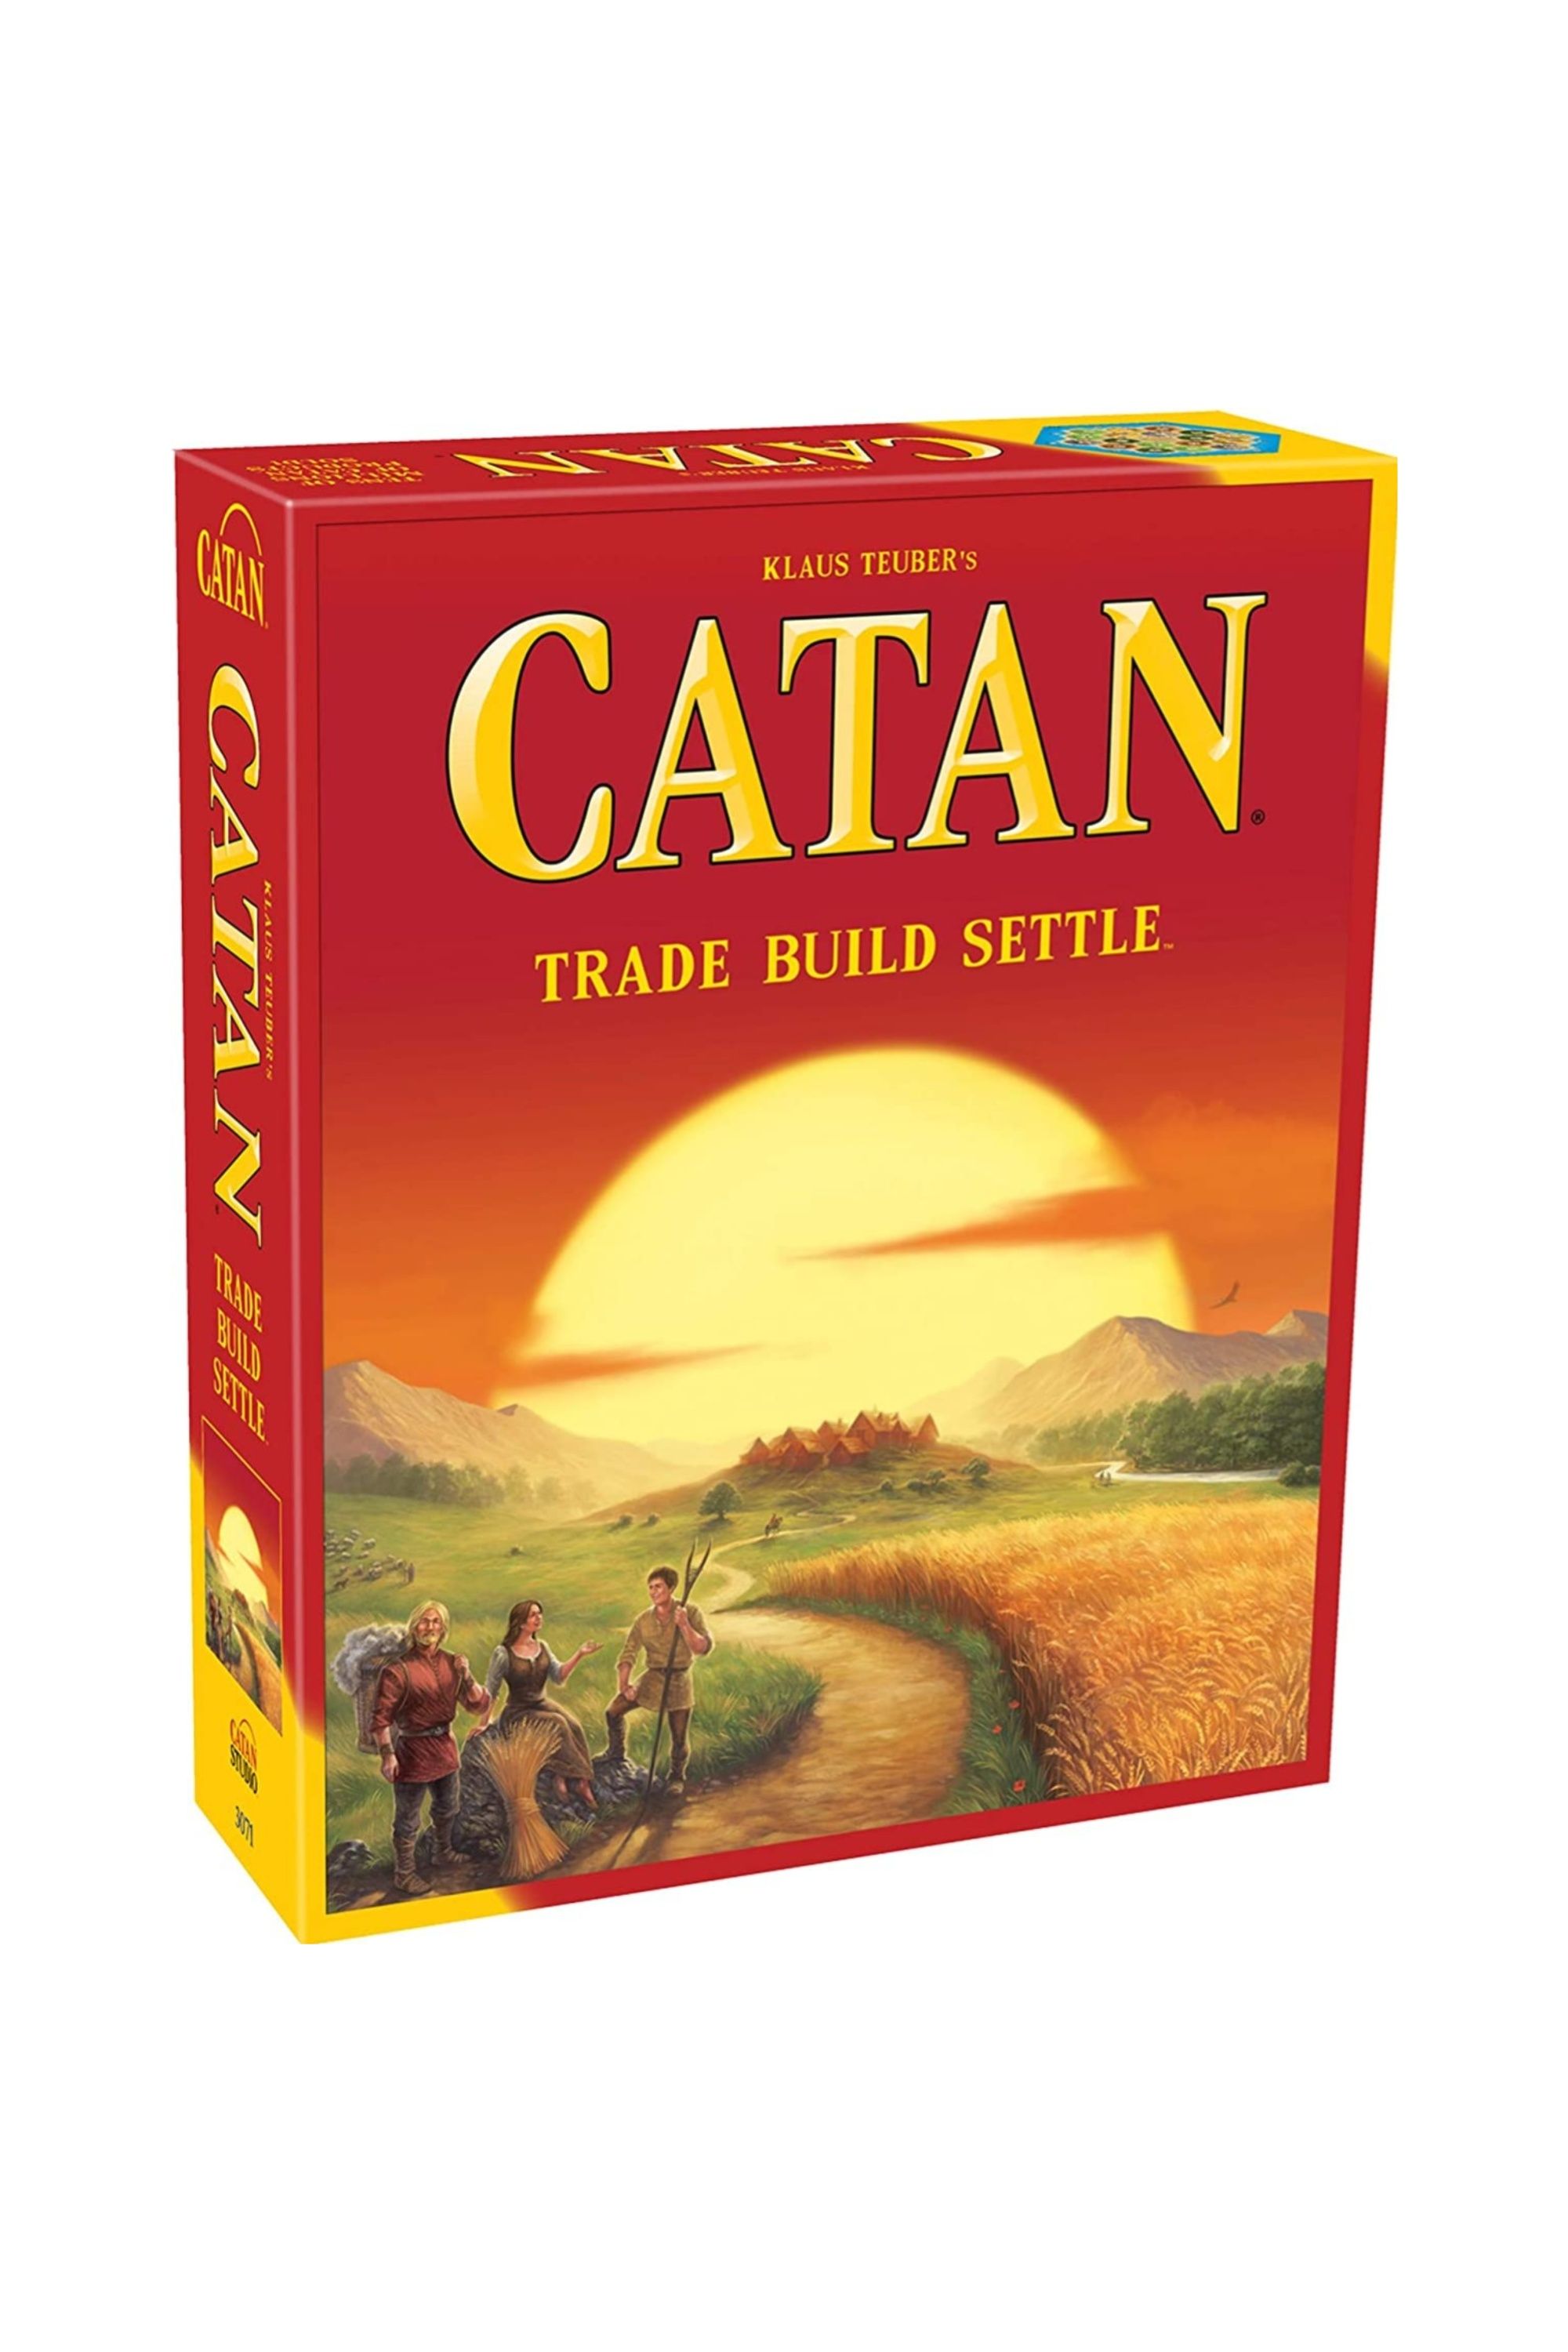 Catan board game box